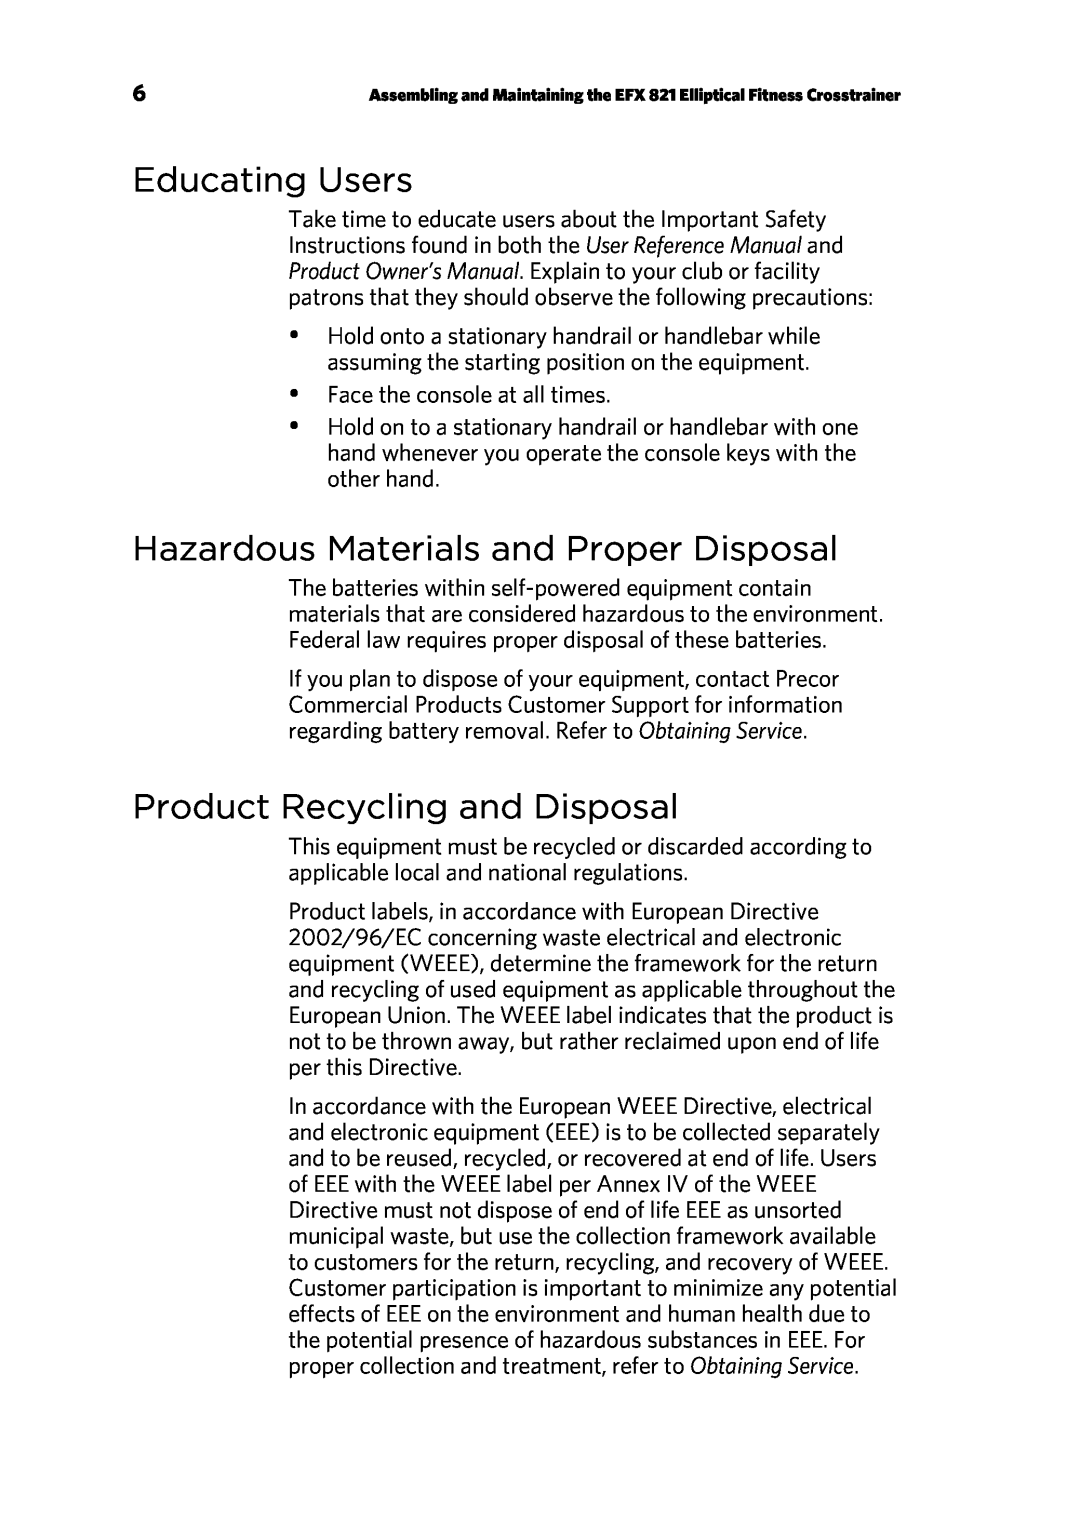 Precor 300753-201 manual Educating Users, Hazardous Materials and Proper Disposal, Product Recycling and Disposal 